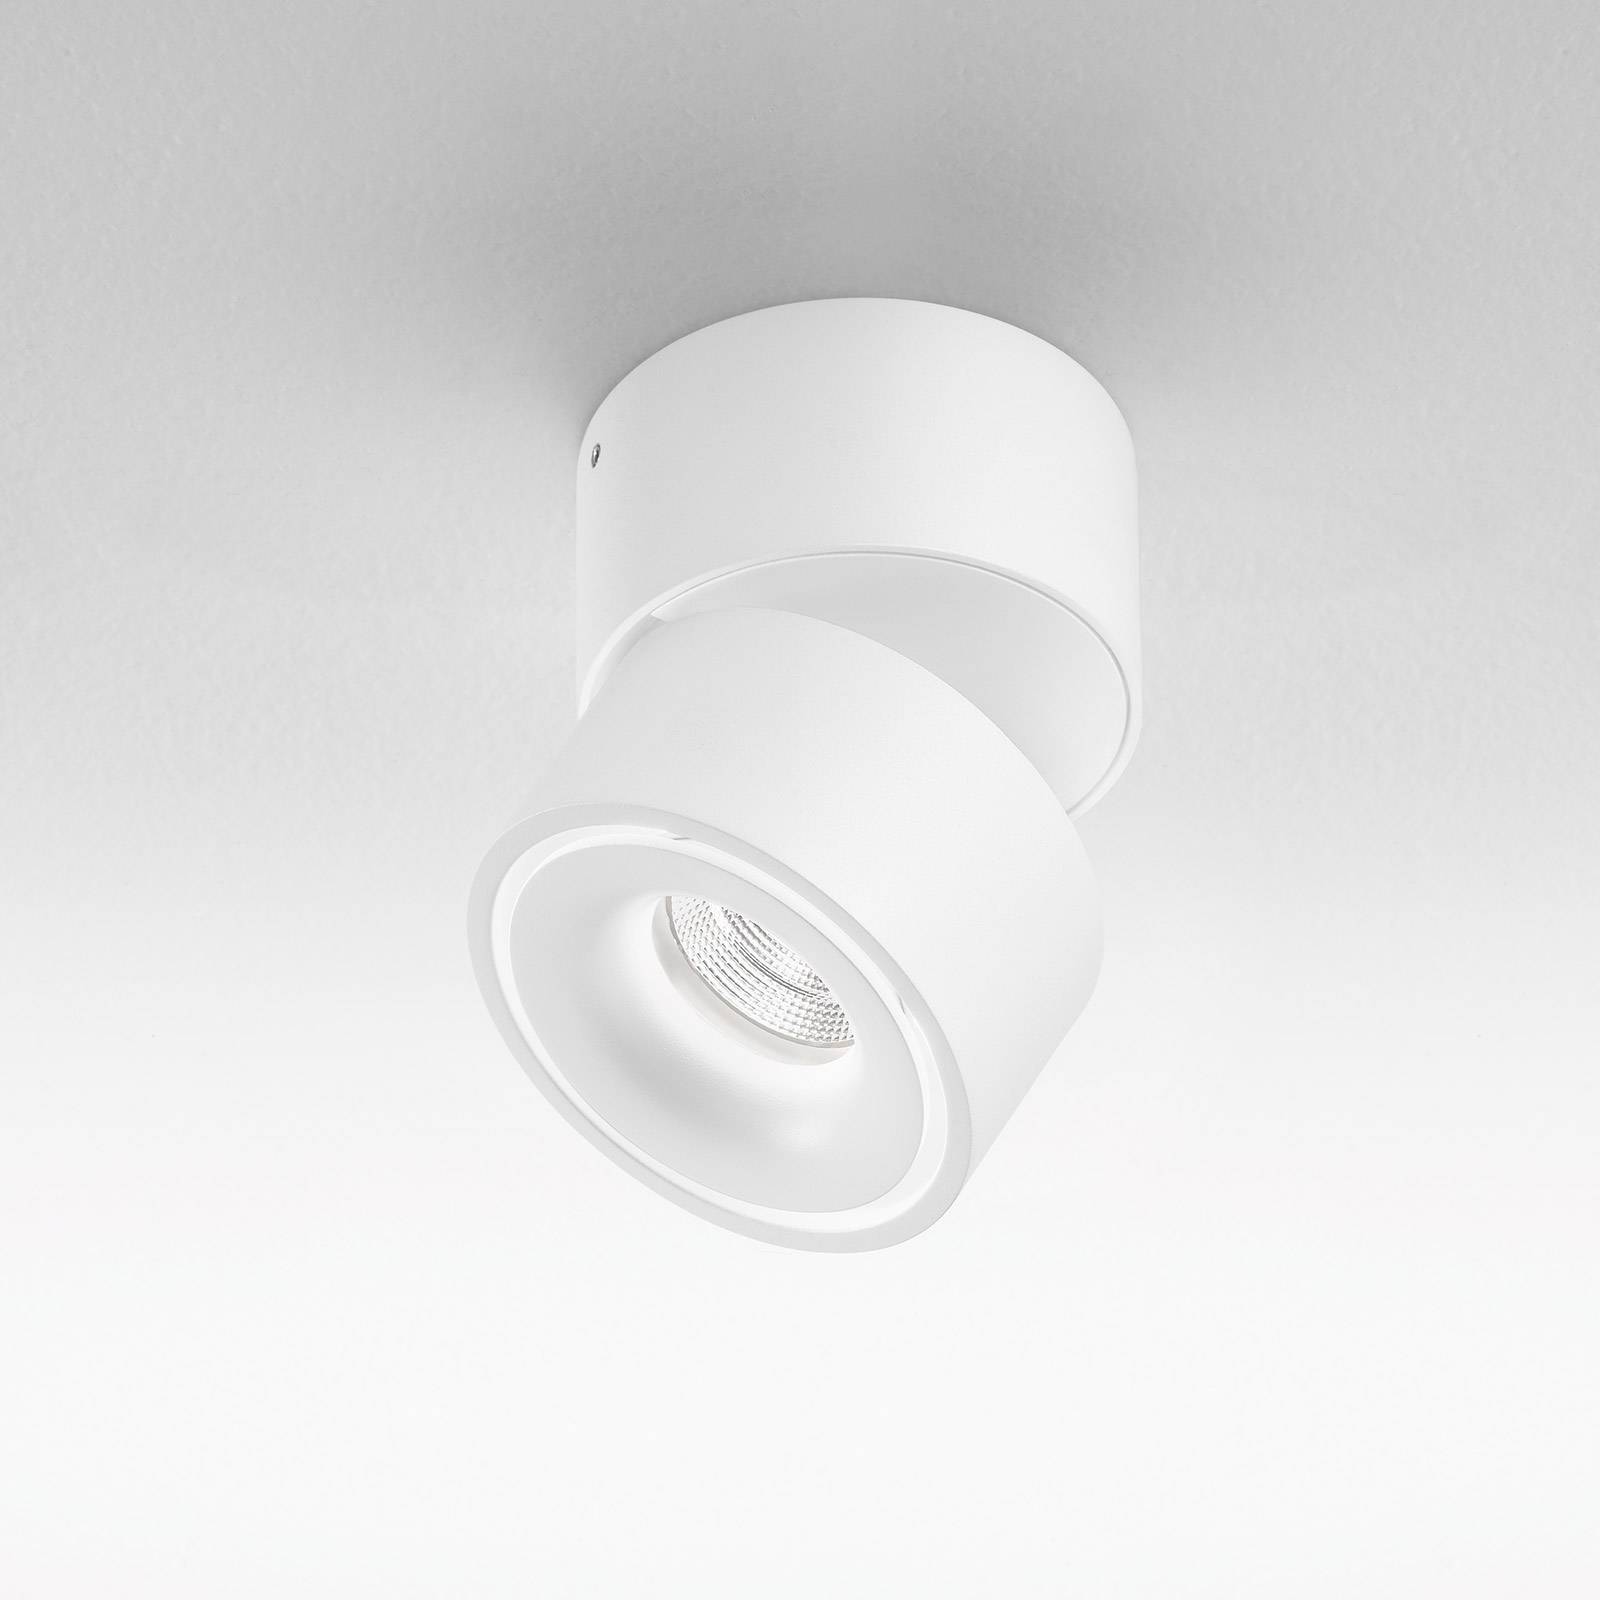 Egger licht egger clippo led spotlámpa sínre dim-to-warm fehér